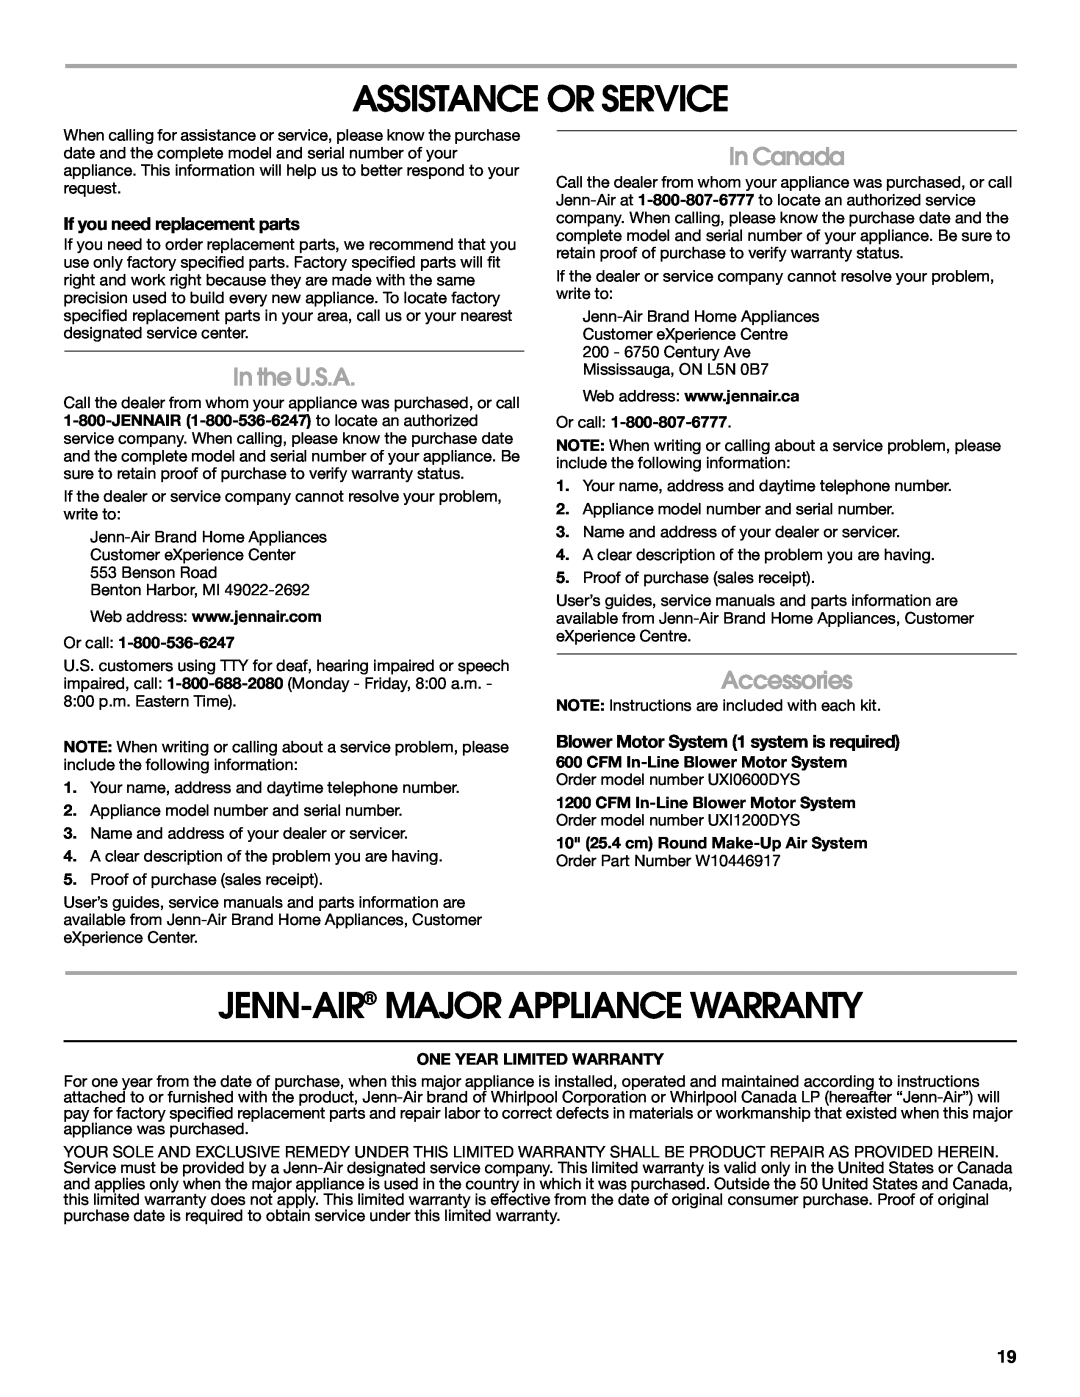 Jenn-Air LIB0057678 Assistance Or Service, Jenn-Air Major Appliance Warranty, In the U.S.A, In Canada, Accessories 